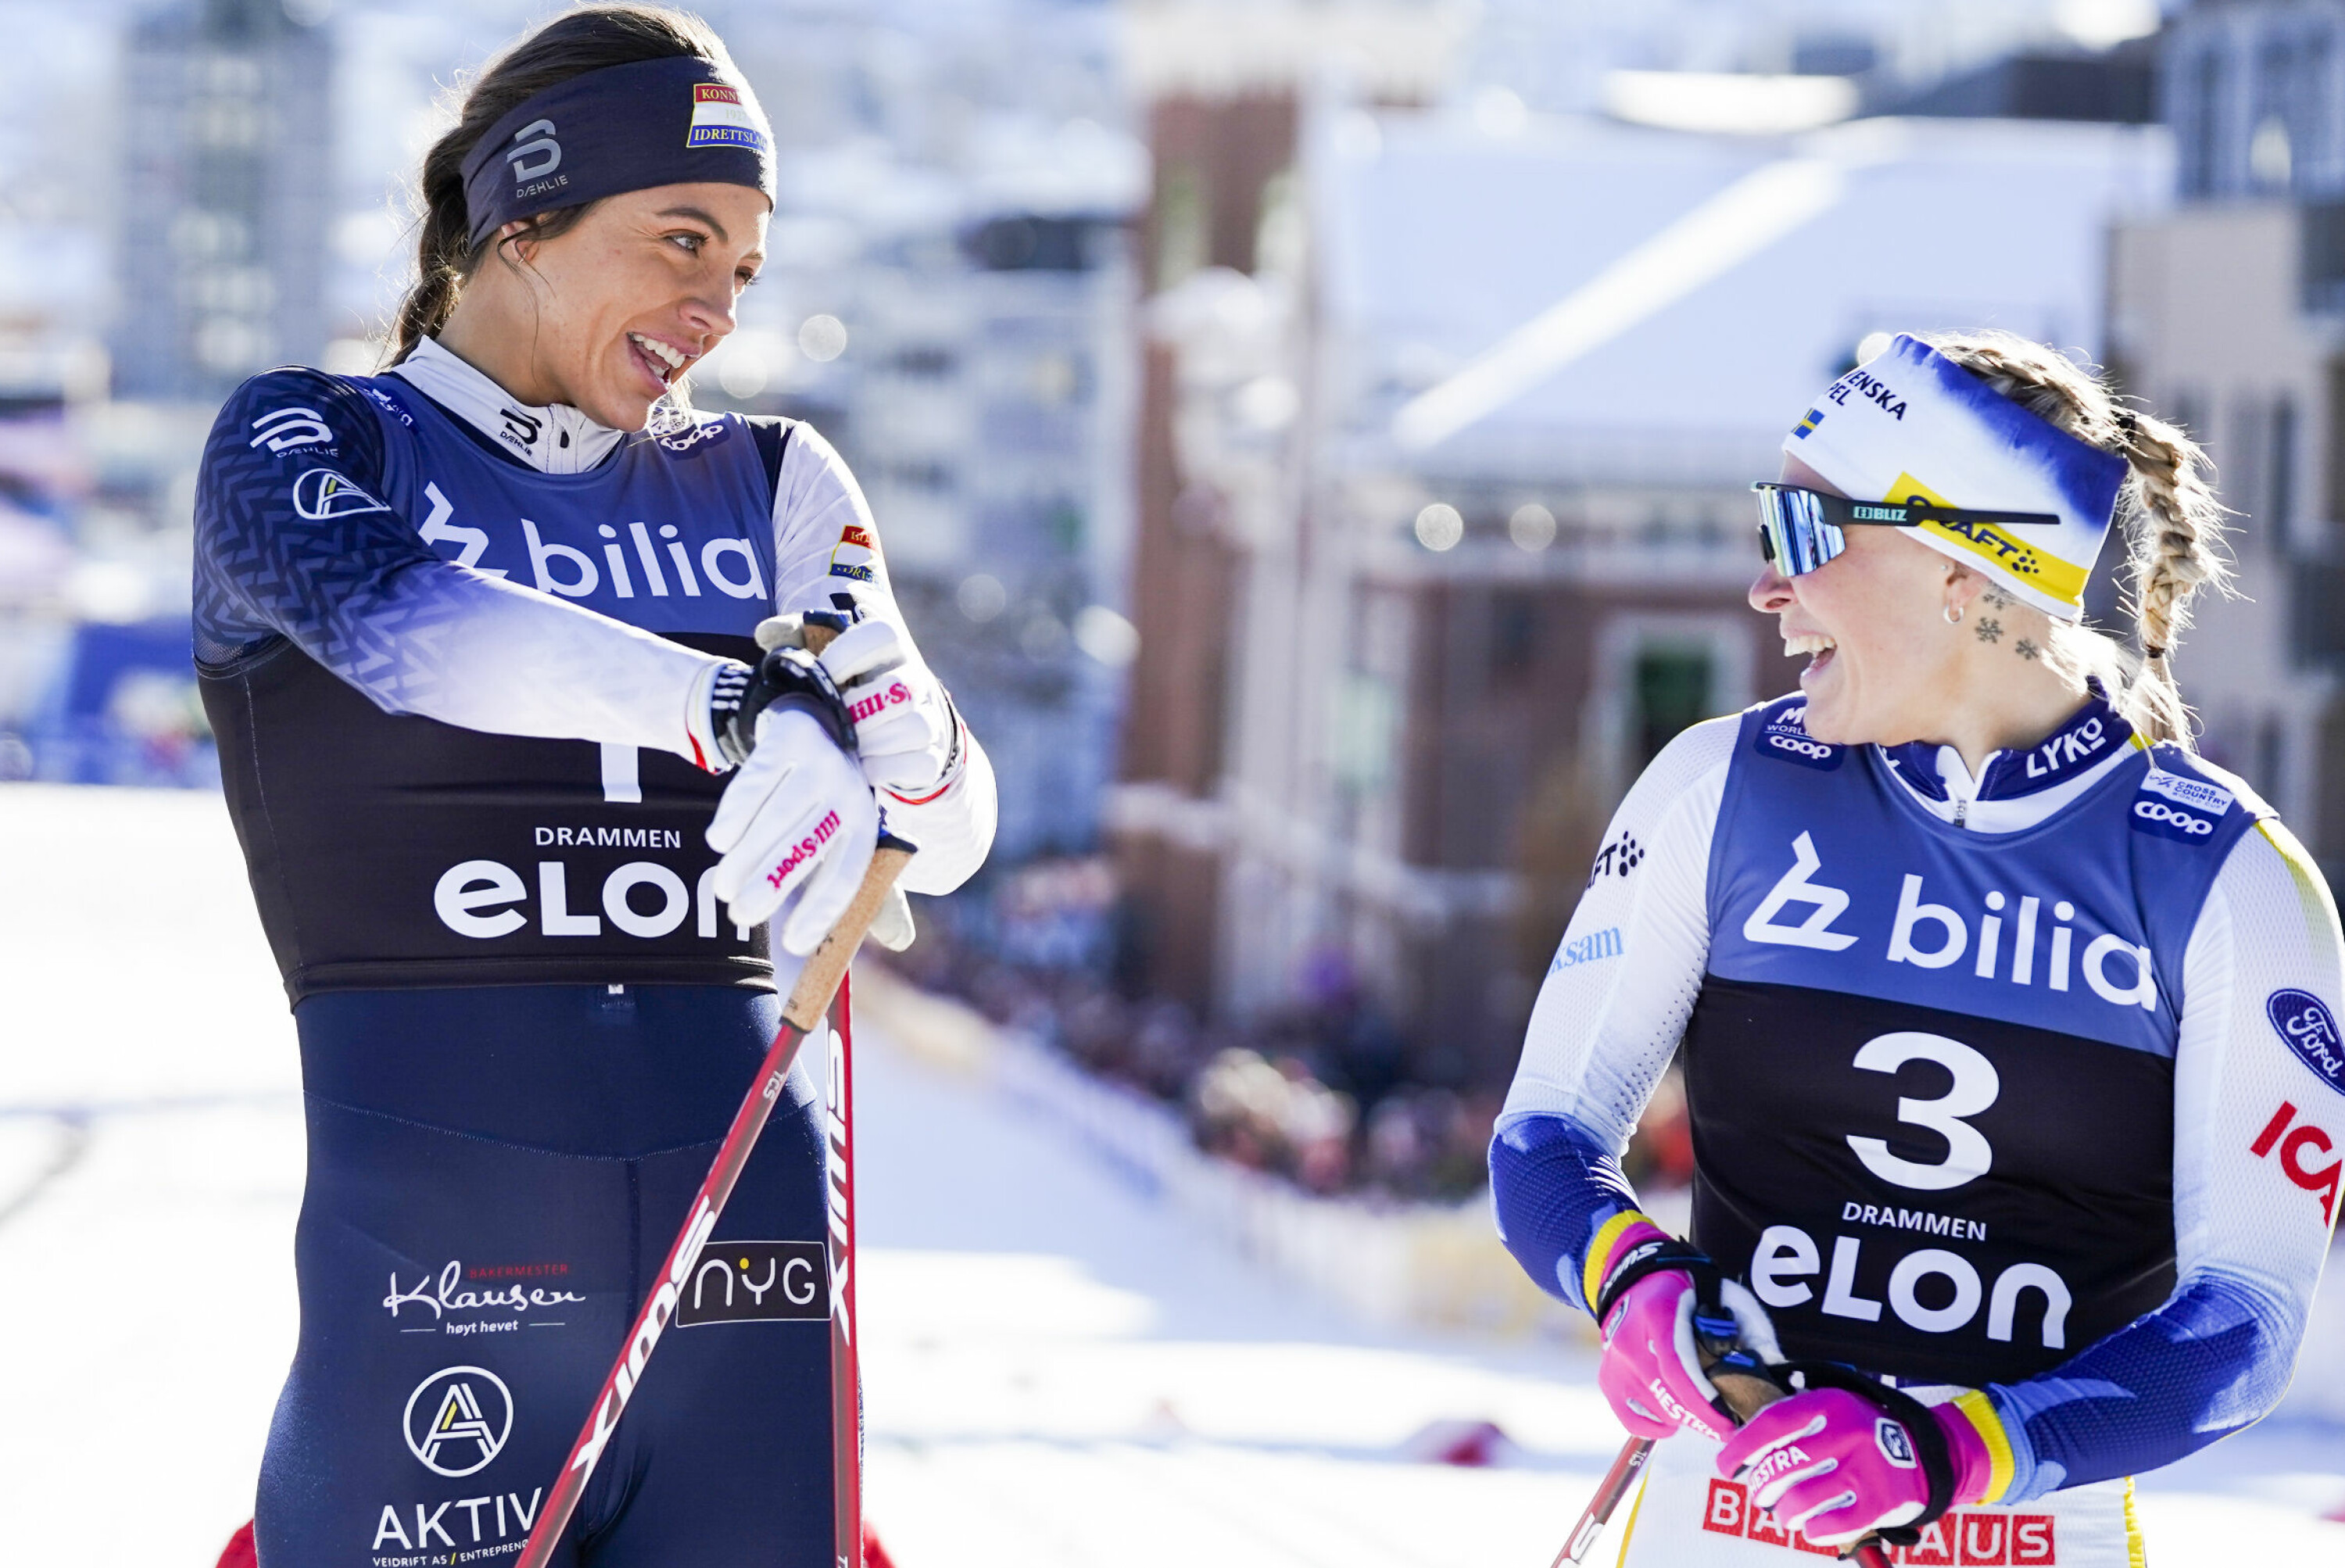 Drammen 20230314. Kristine Stavås Skistad vinner under sprint finale I World Cup i Drammen.  Jonna Sundling t.h blir nummer to.Foto: Lise Åserud / NTB